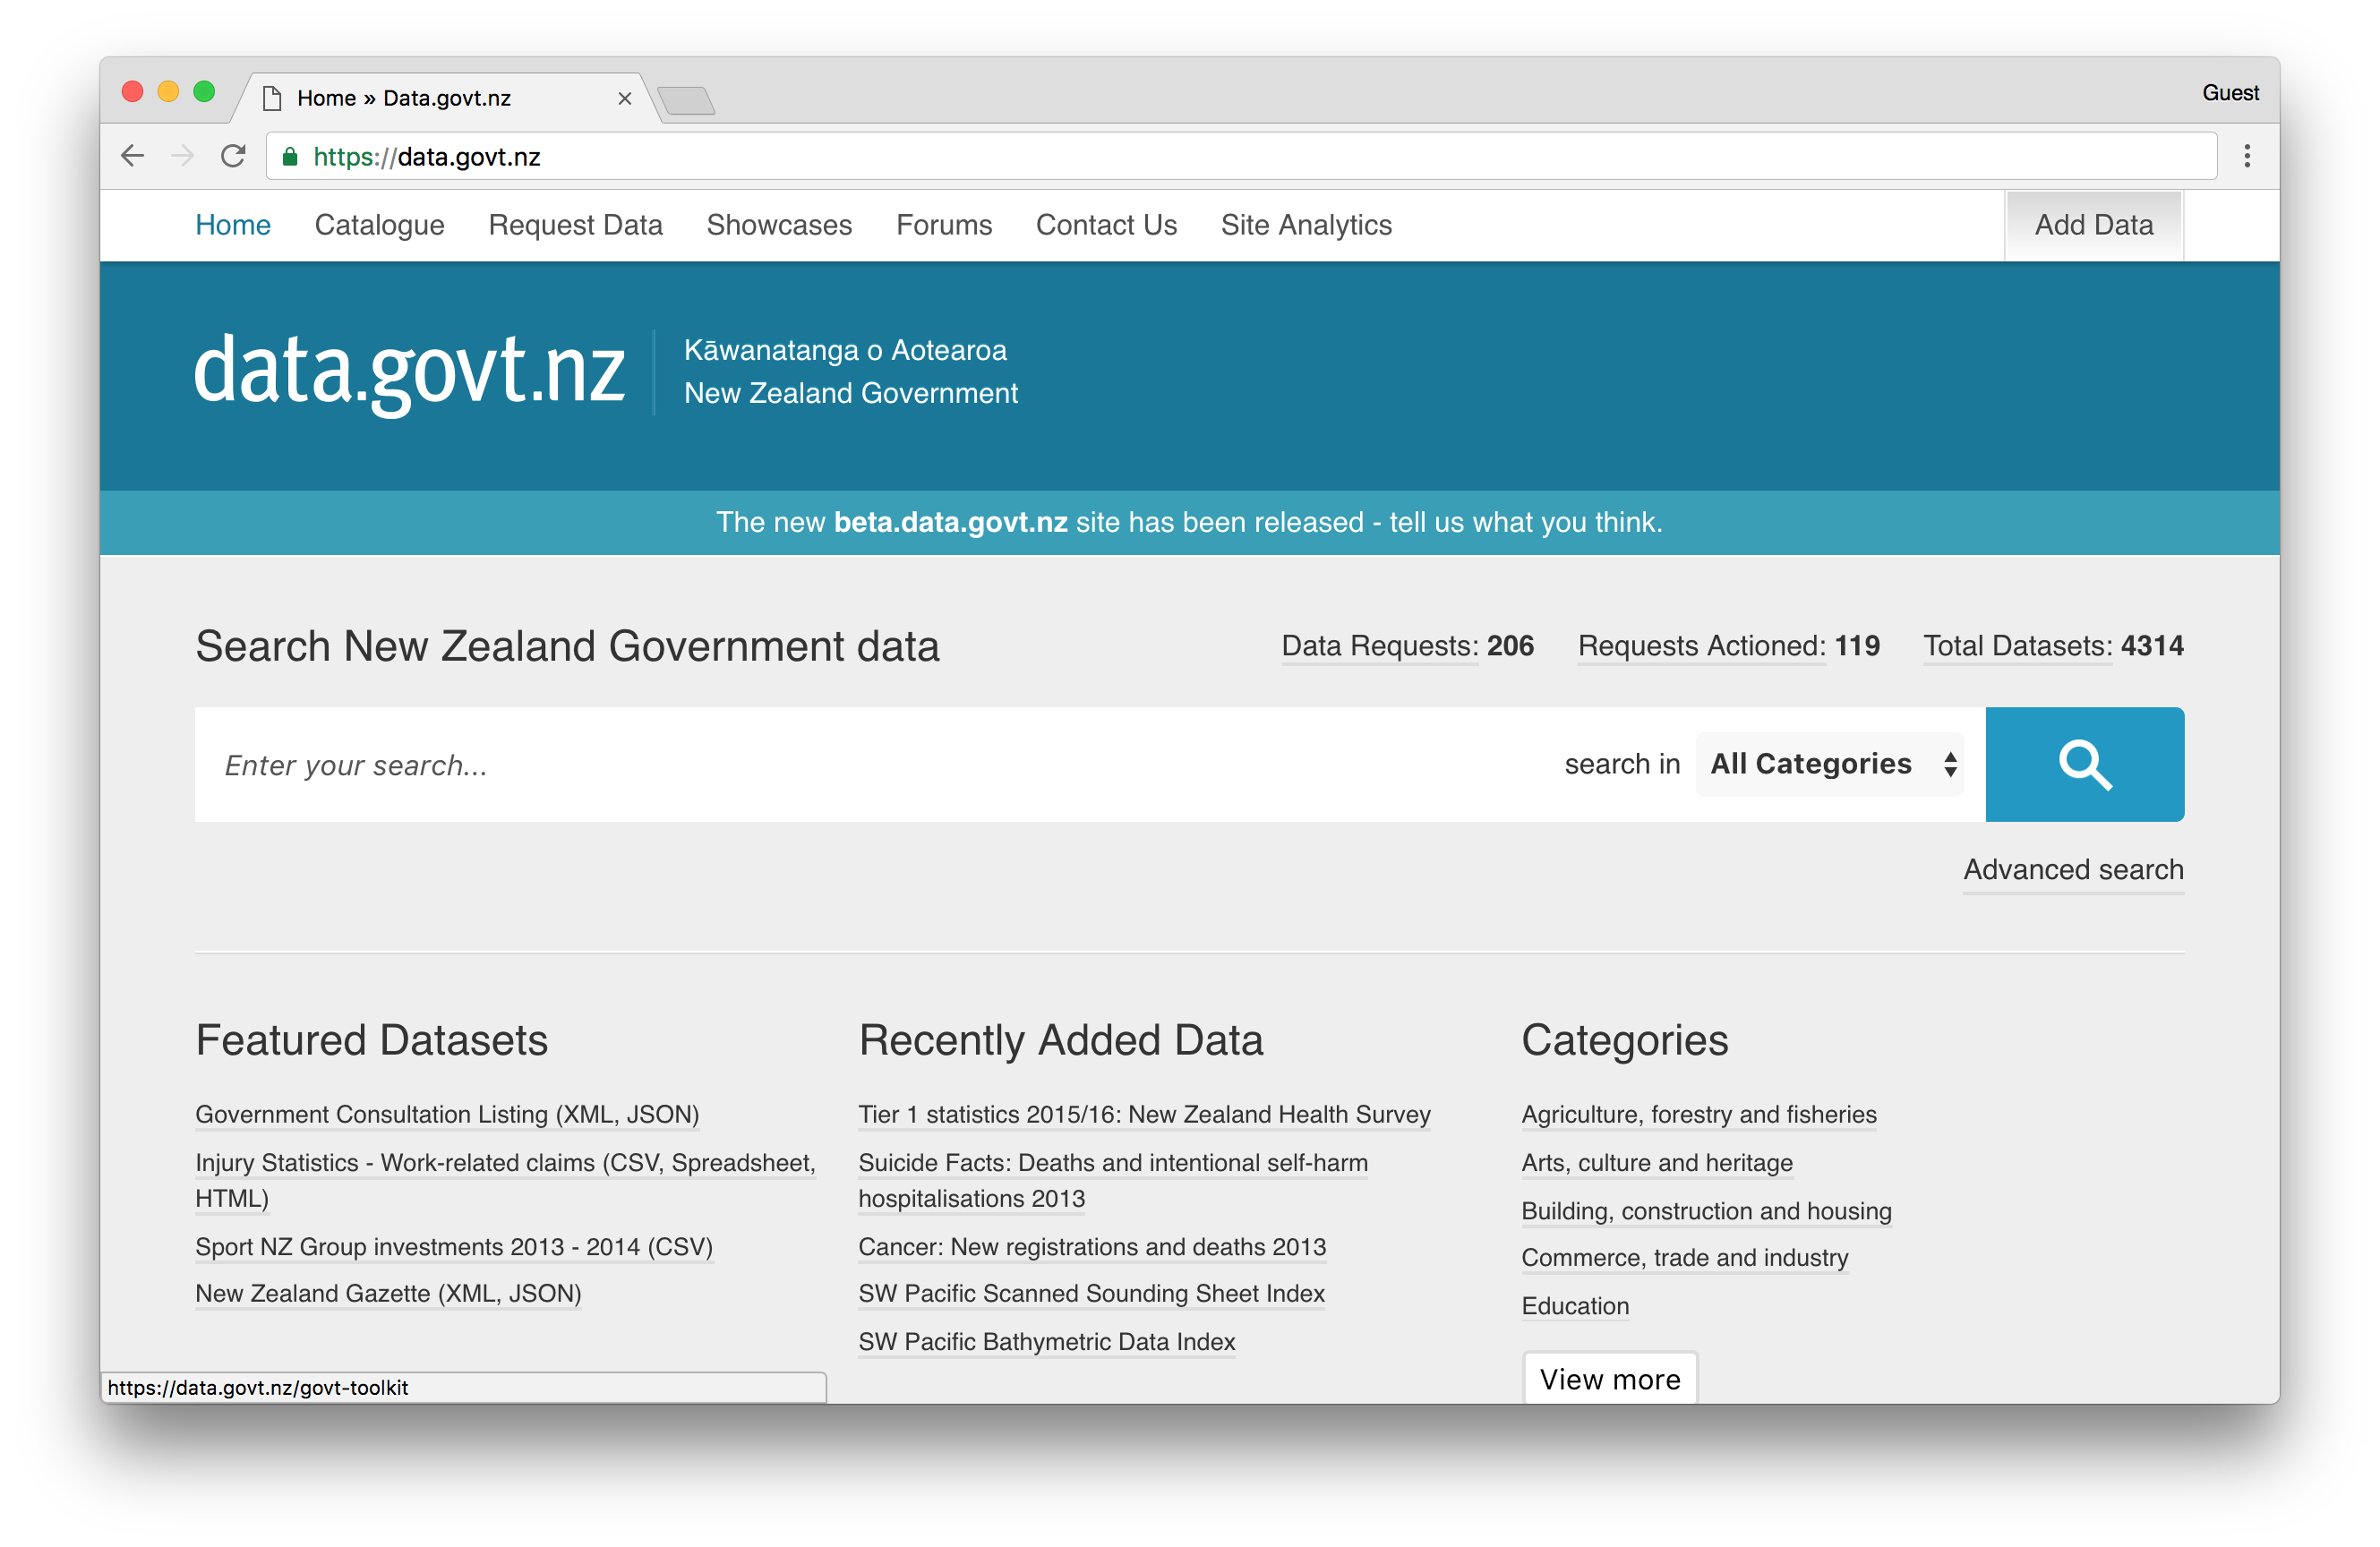 Data.govt.nz homepage